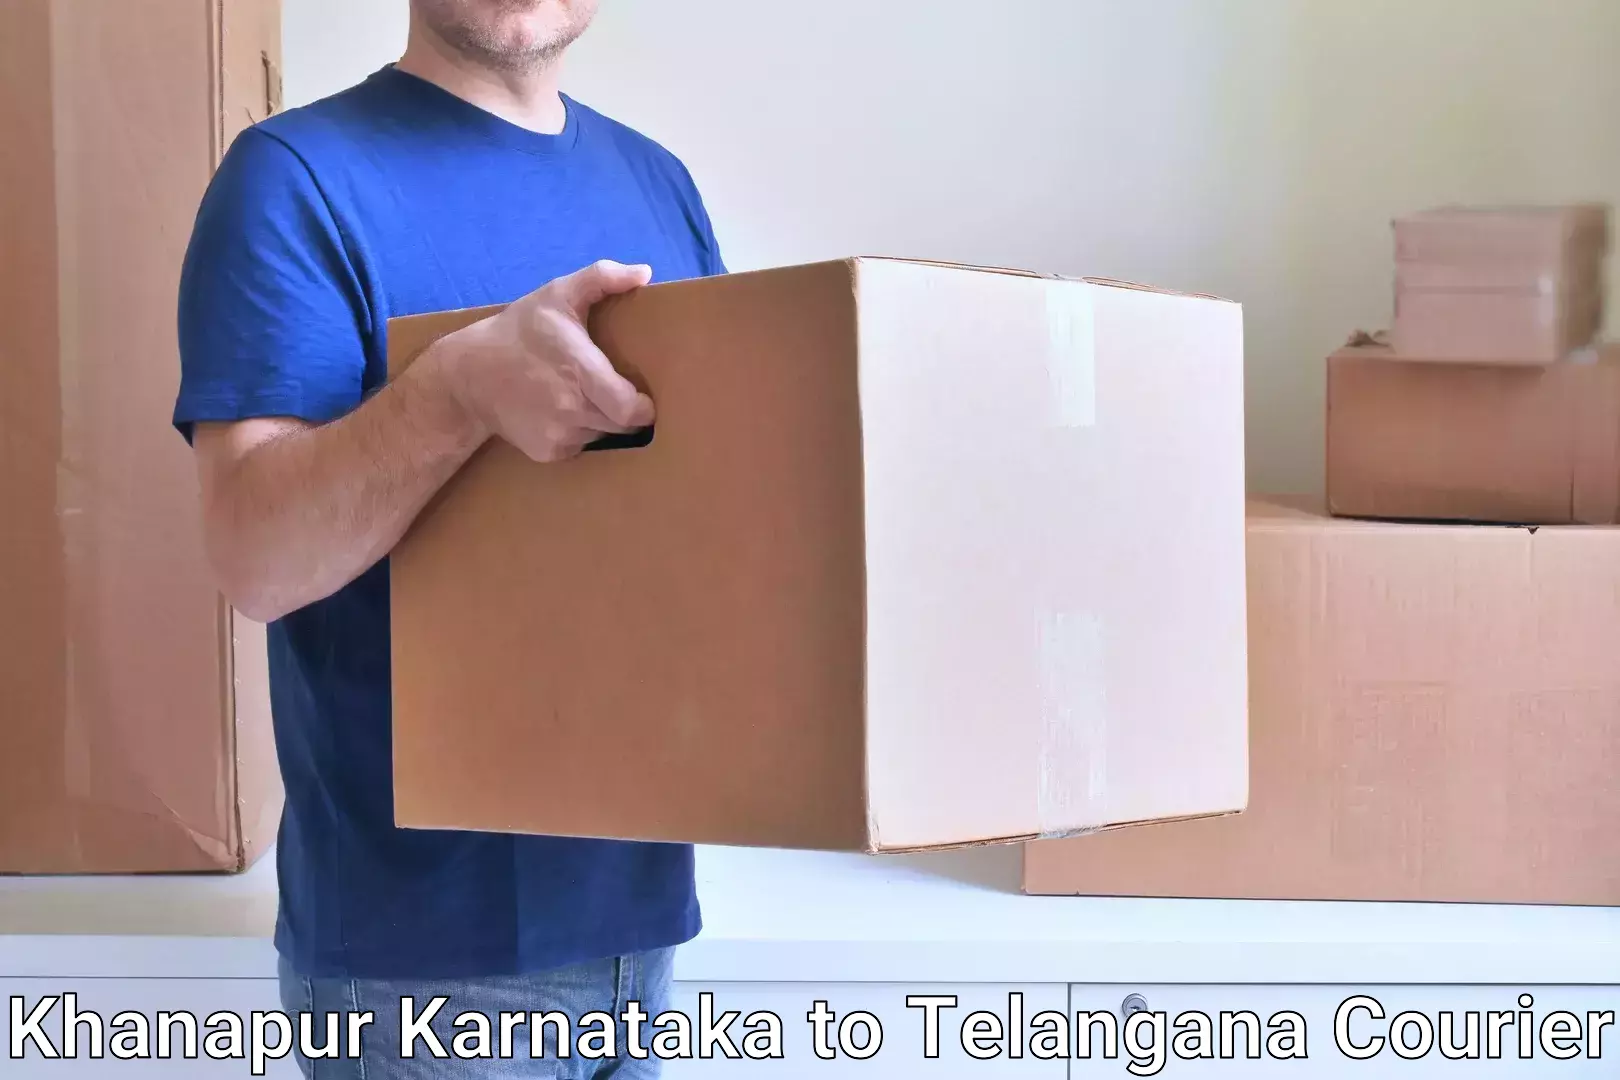 Professional parcel services Khanapur Karnataka to Cheyyur